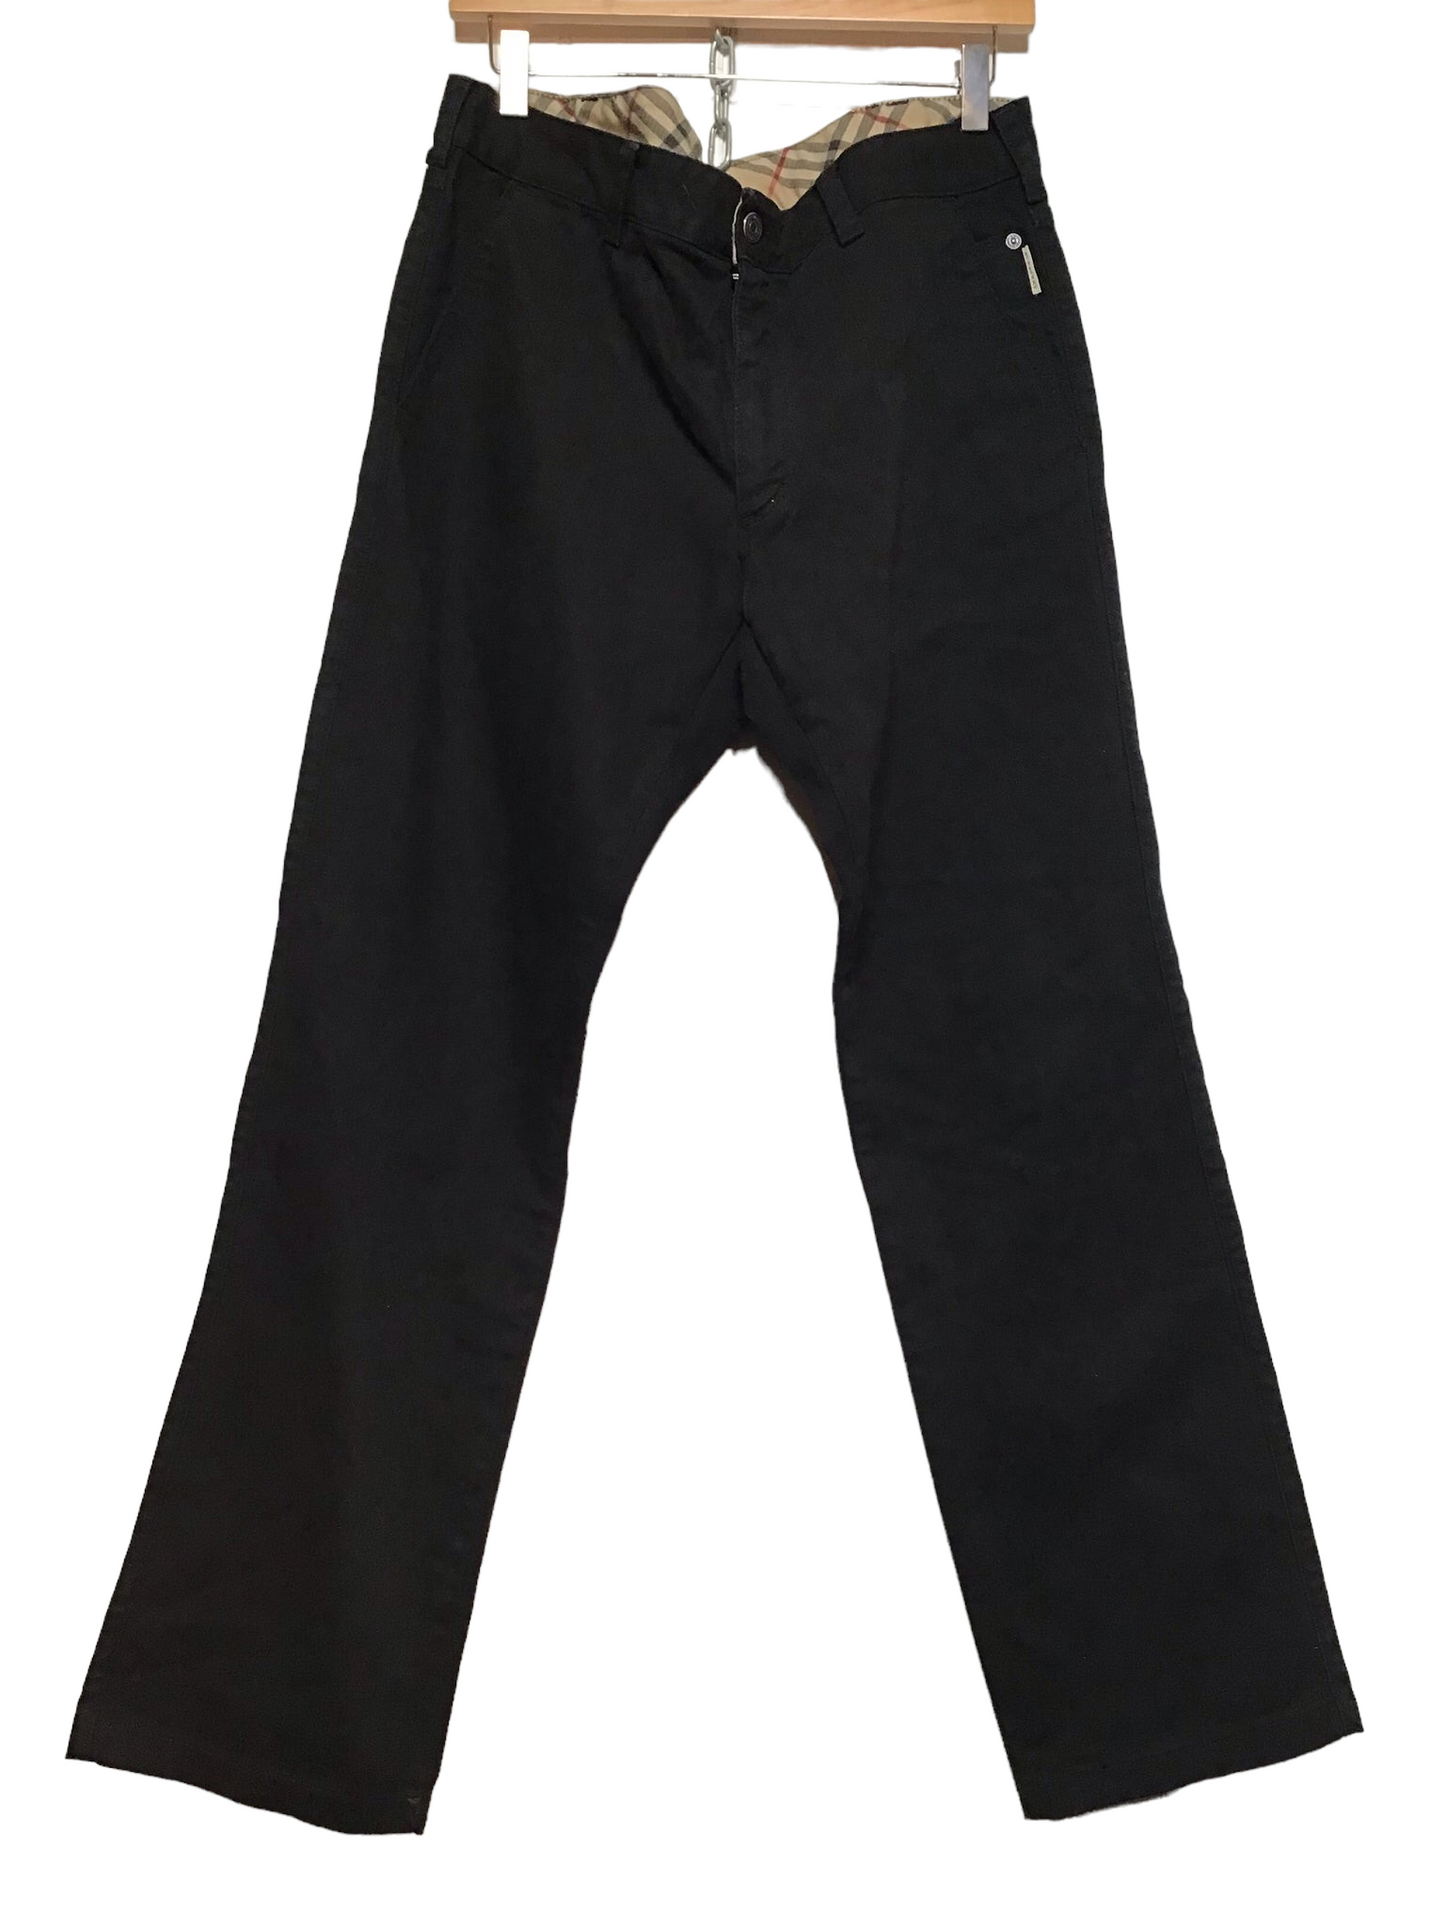 Burberry Black Straight Leg Jeans (34”X 30”)